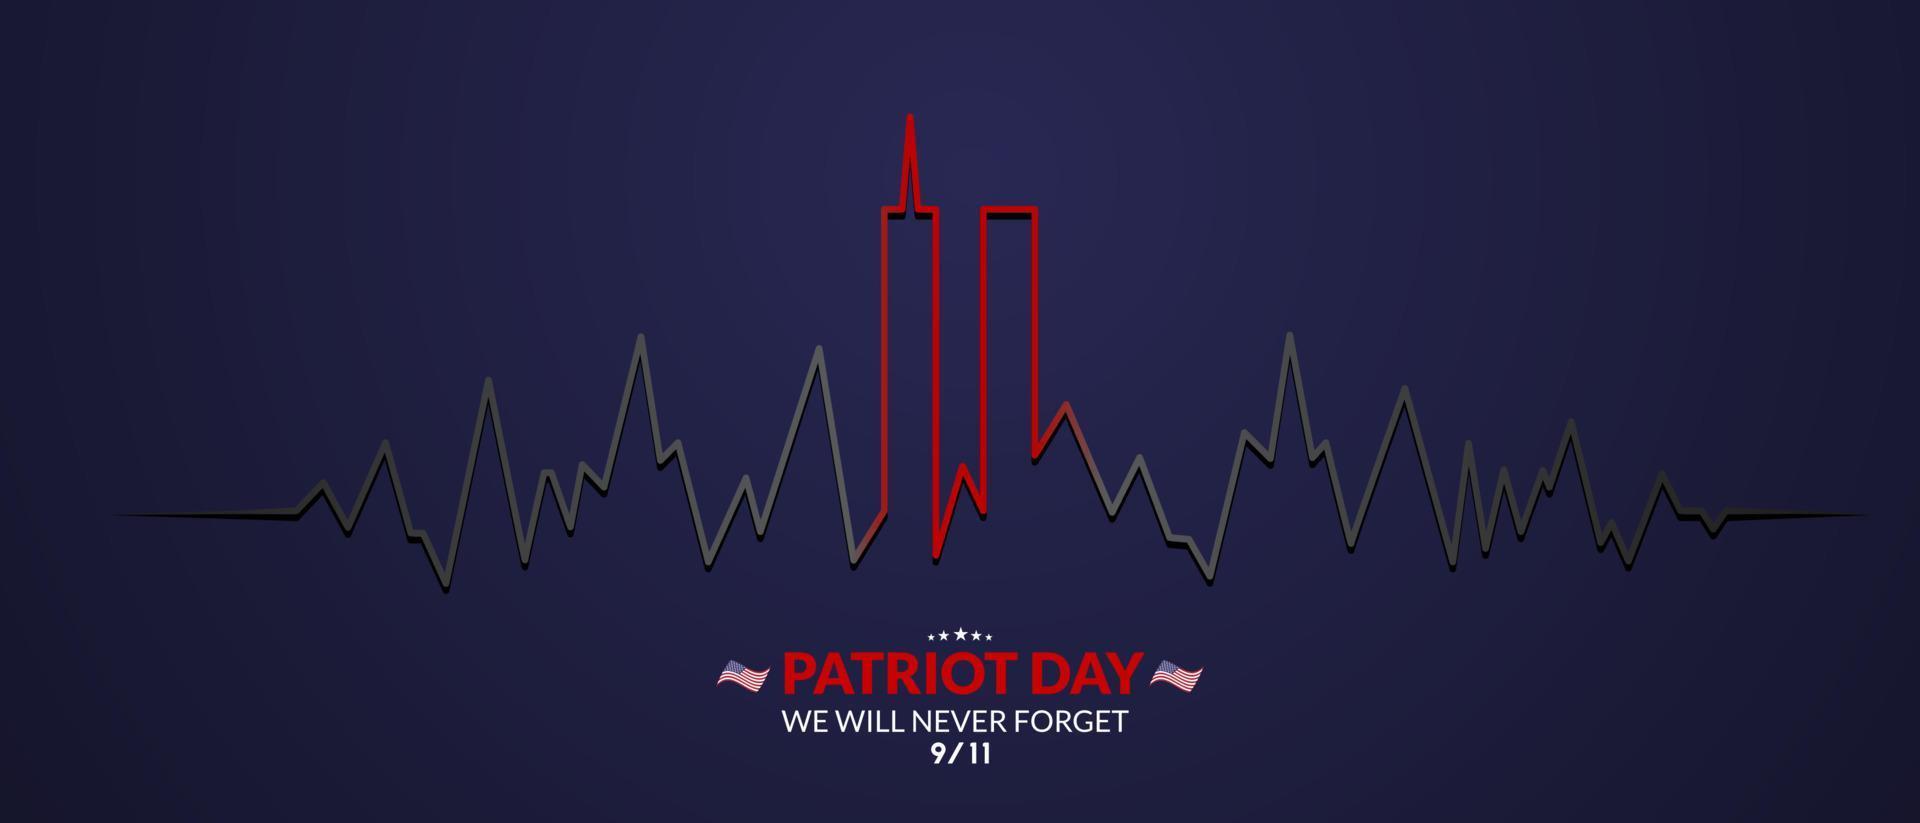 9 11 memorial day 11 de setembro. patriot day world trade center. nunca esqueceremos, os ataques terroristas de 11 de setembro. torres gêmeas representando o número onze. freqüência cardíaca do centro de comércio mundial vetor